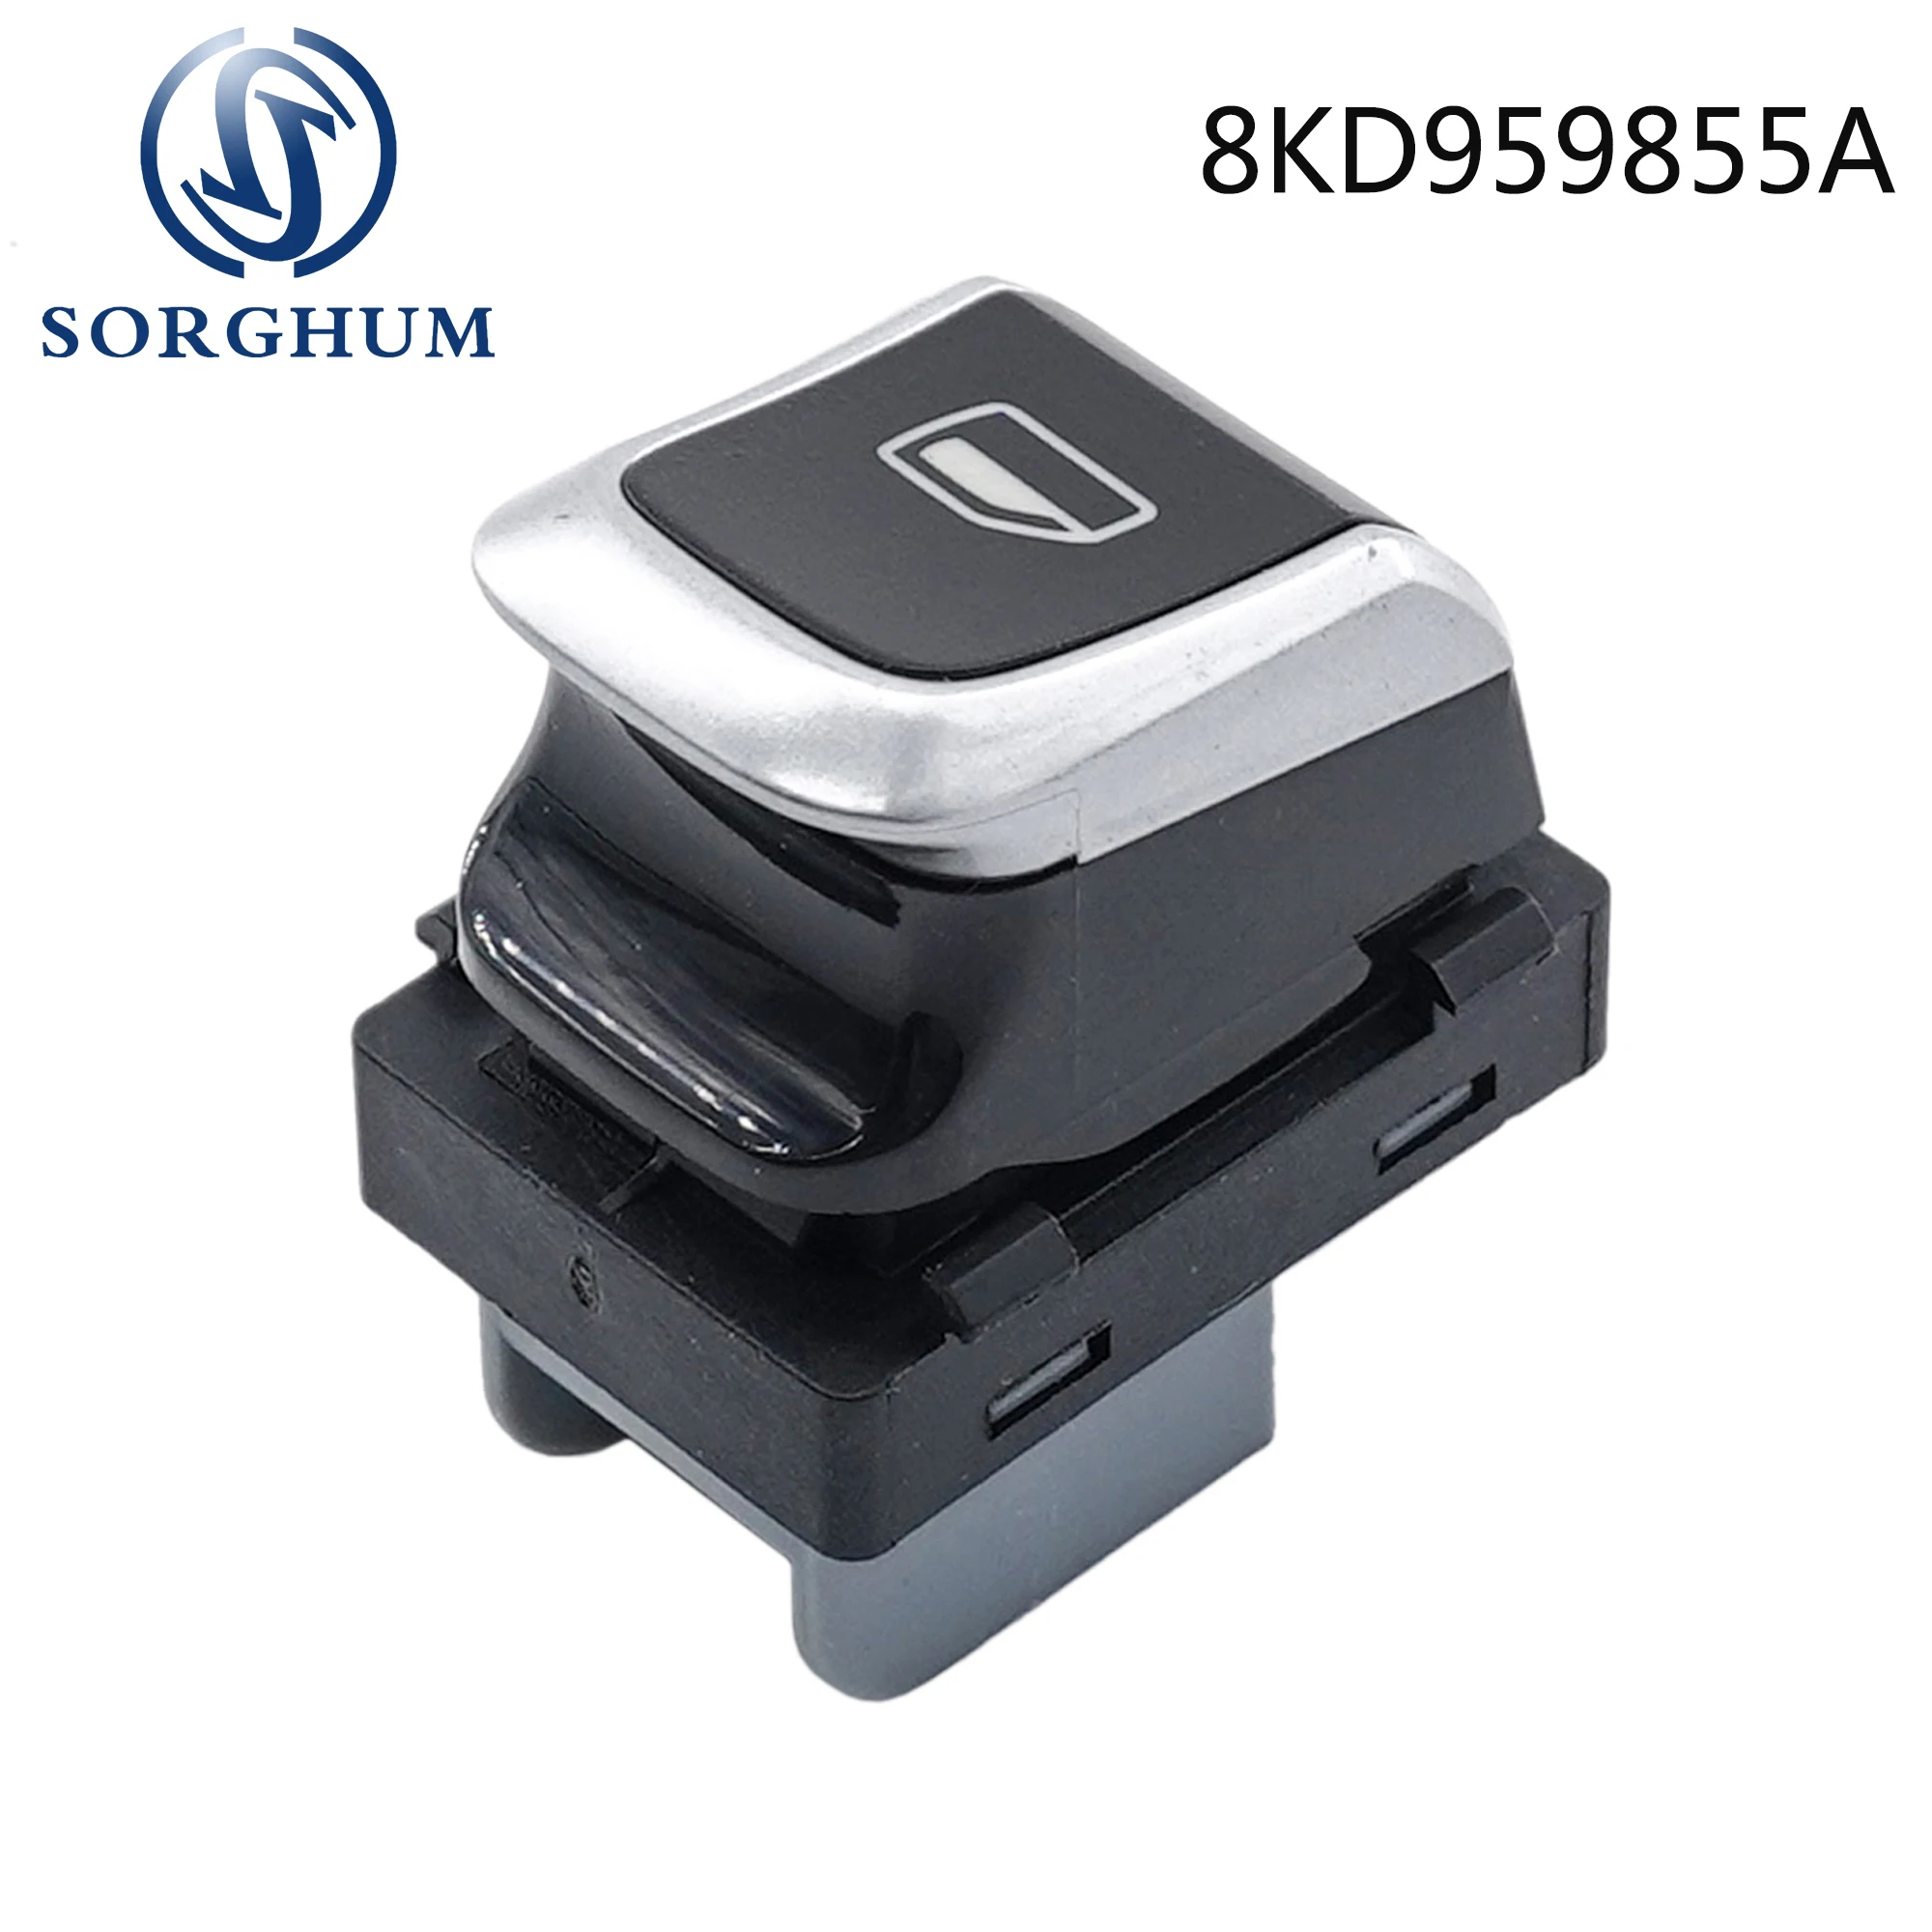 

Sorghum For AUDI A4 S4 Q5 B8 Allroad Chrome Car Master Window Power Control Switch Button 8KD959855A 8KD959855 8KD 959 855